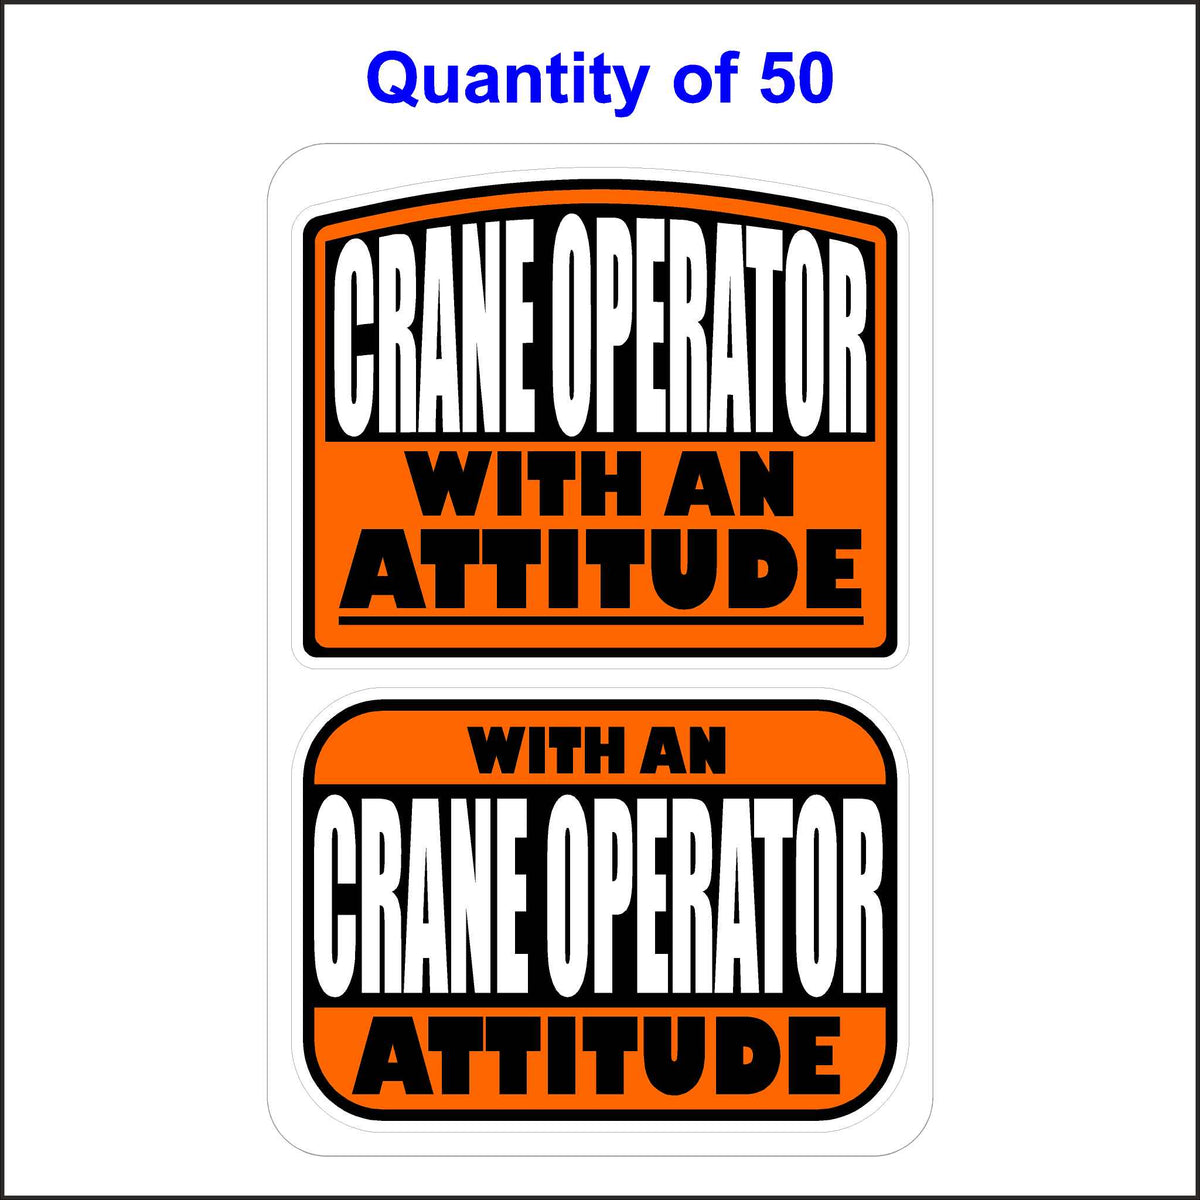 Crane Operator With An Attitude Stickers 50 Quantity.